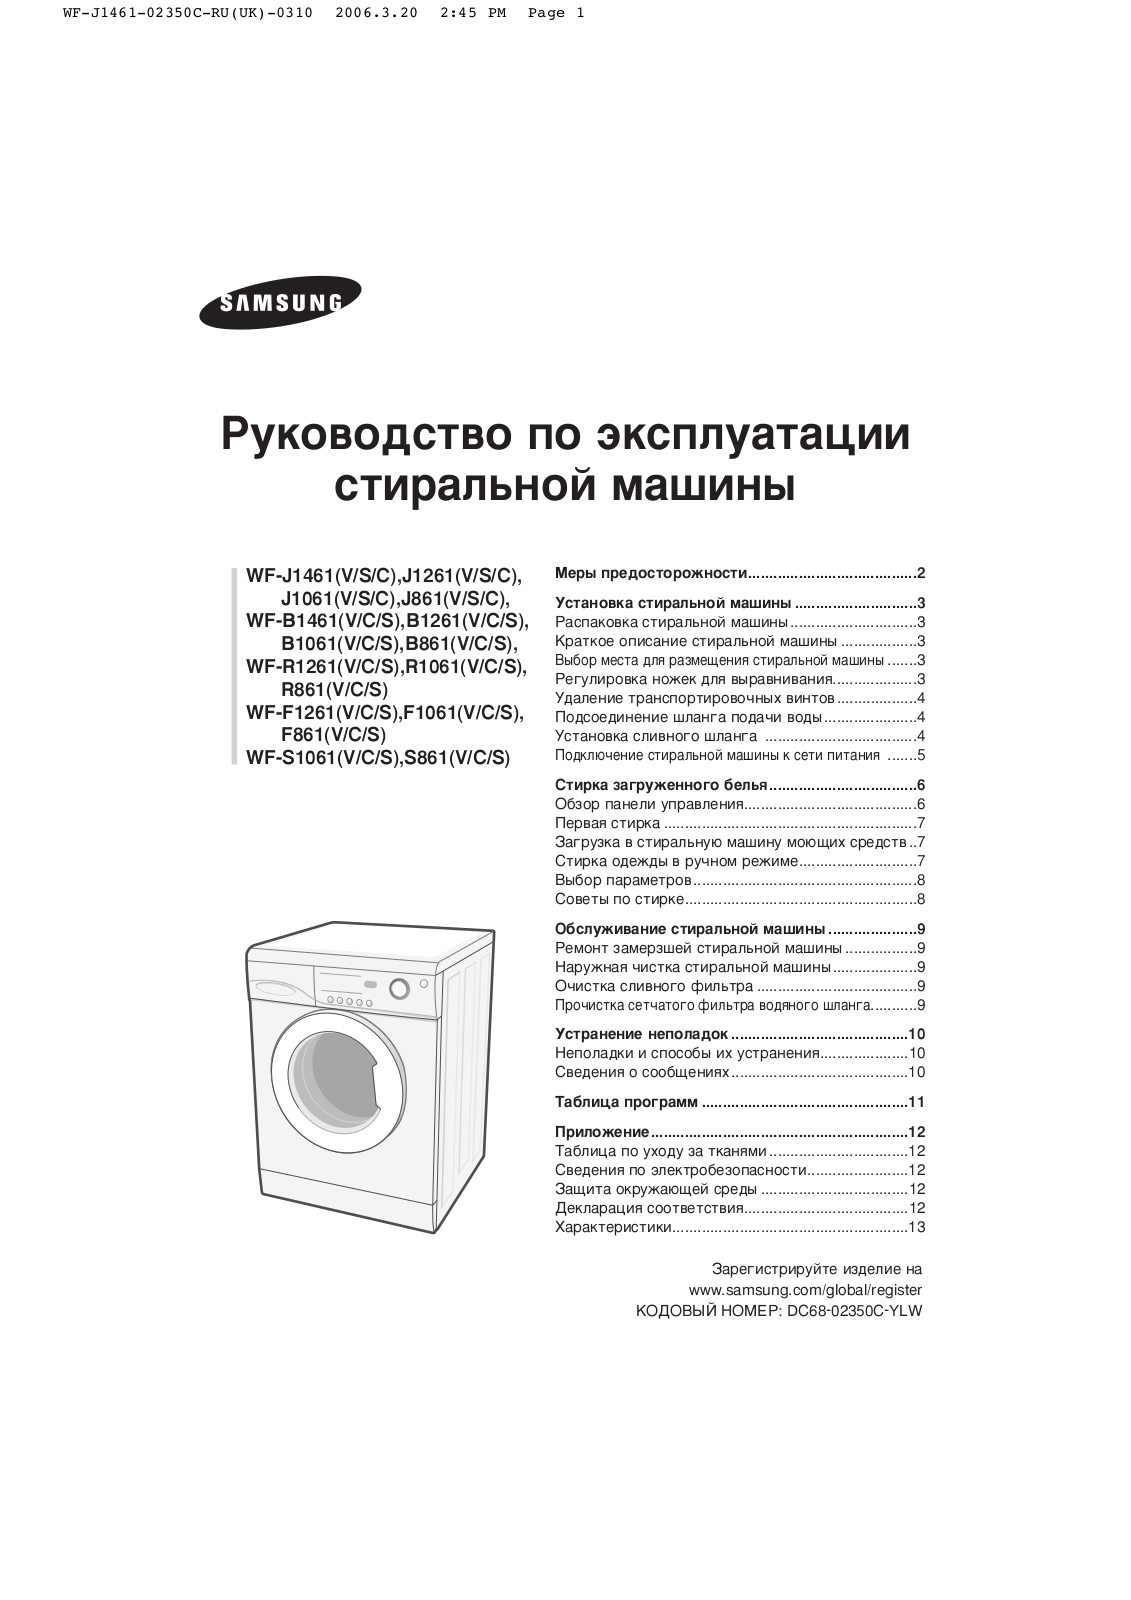 Samsung WF-F1261 User Manual